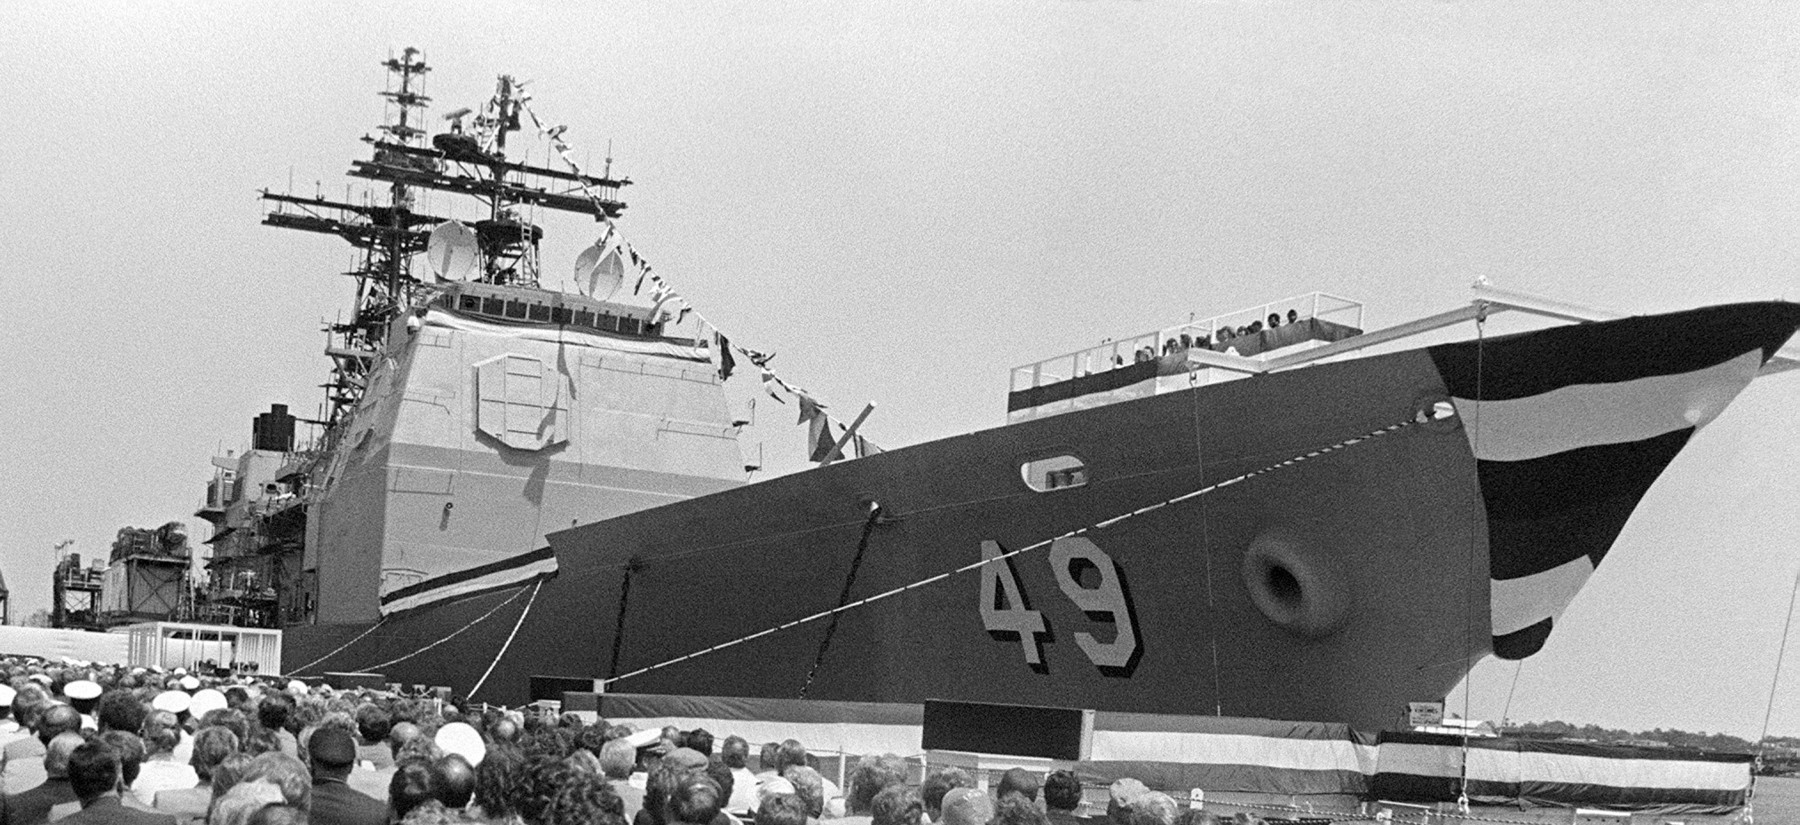 cg-49 uss vincennes ticonderoga class guided missile cruiser aegis us navy 26